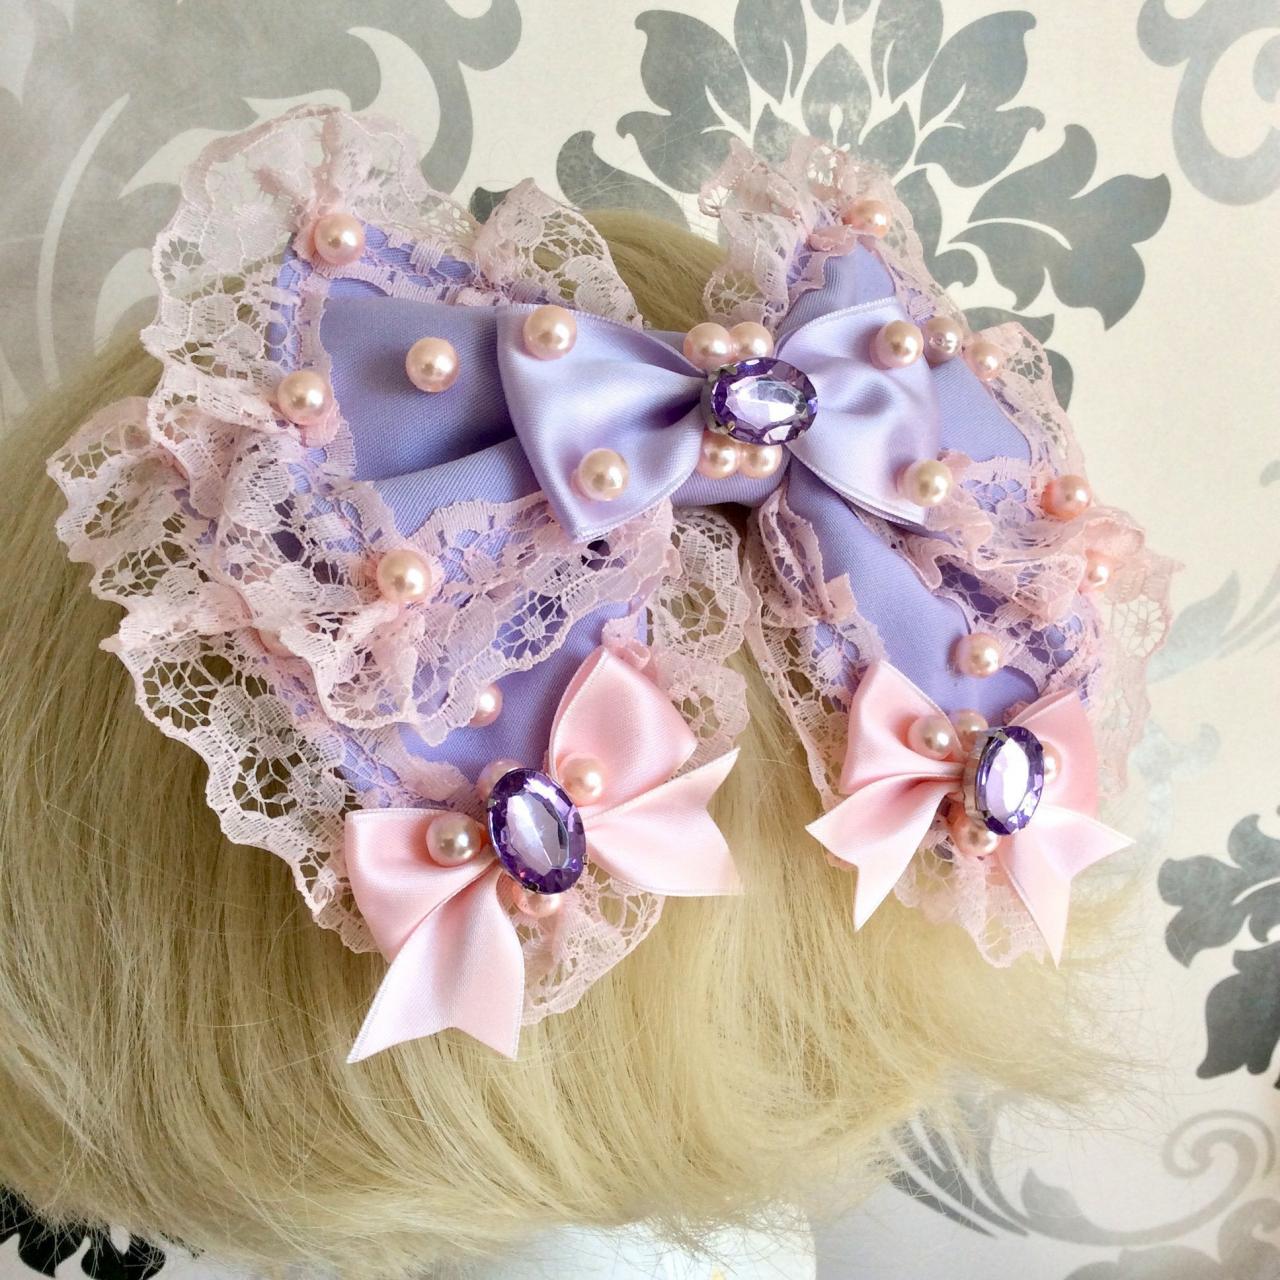 Beautiful Pink Lilac Hair Bow Decoration Lolita Rhinestone Pearls Frills Lace Braid Kawaii Sweet Heart Sweet Pastel Headdress Headpiece Fairykei